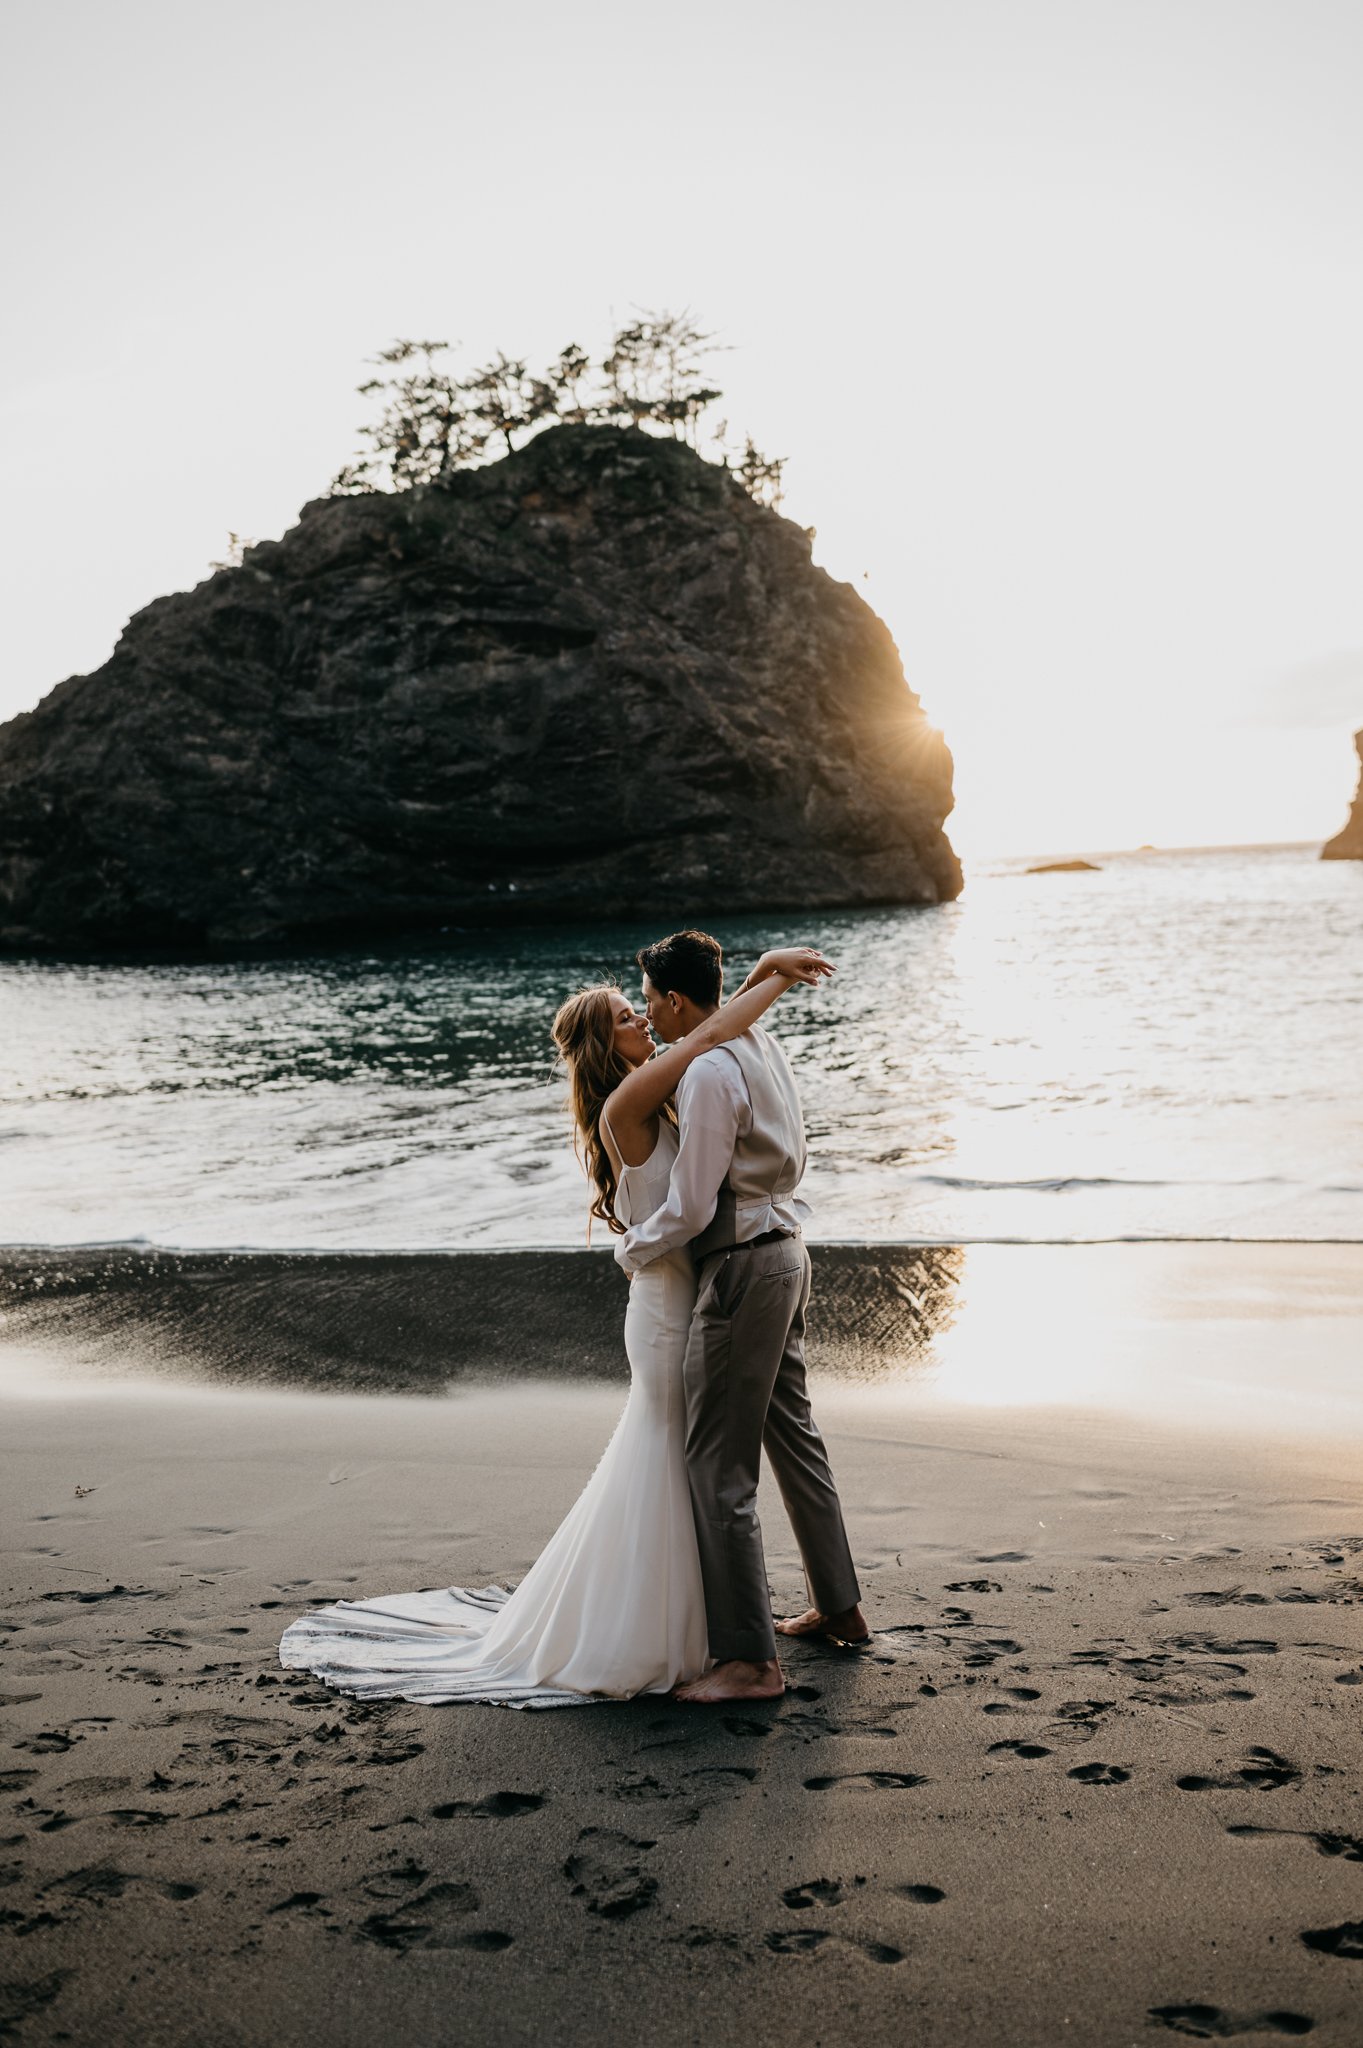 Bride and groom in wedding attire kissing on beach at Samuel H. Boardman Beach in Oregon